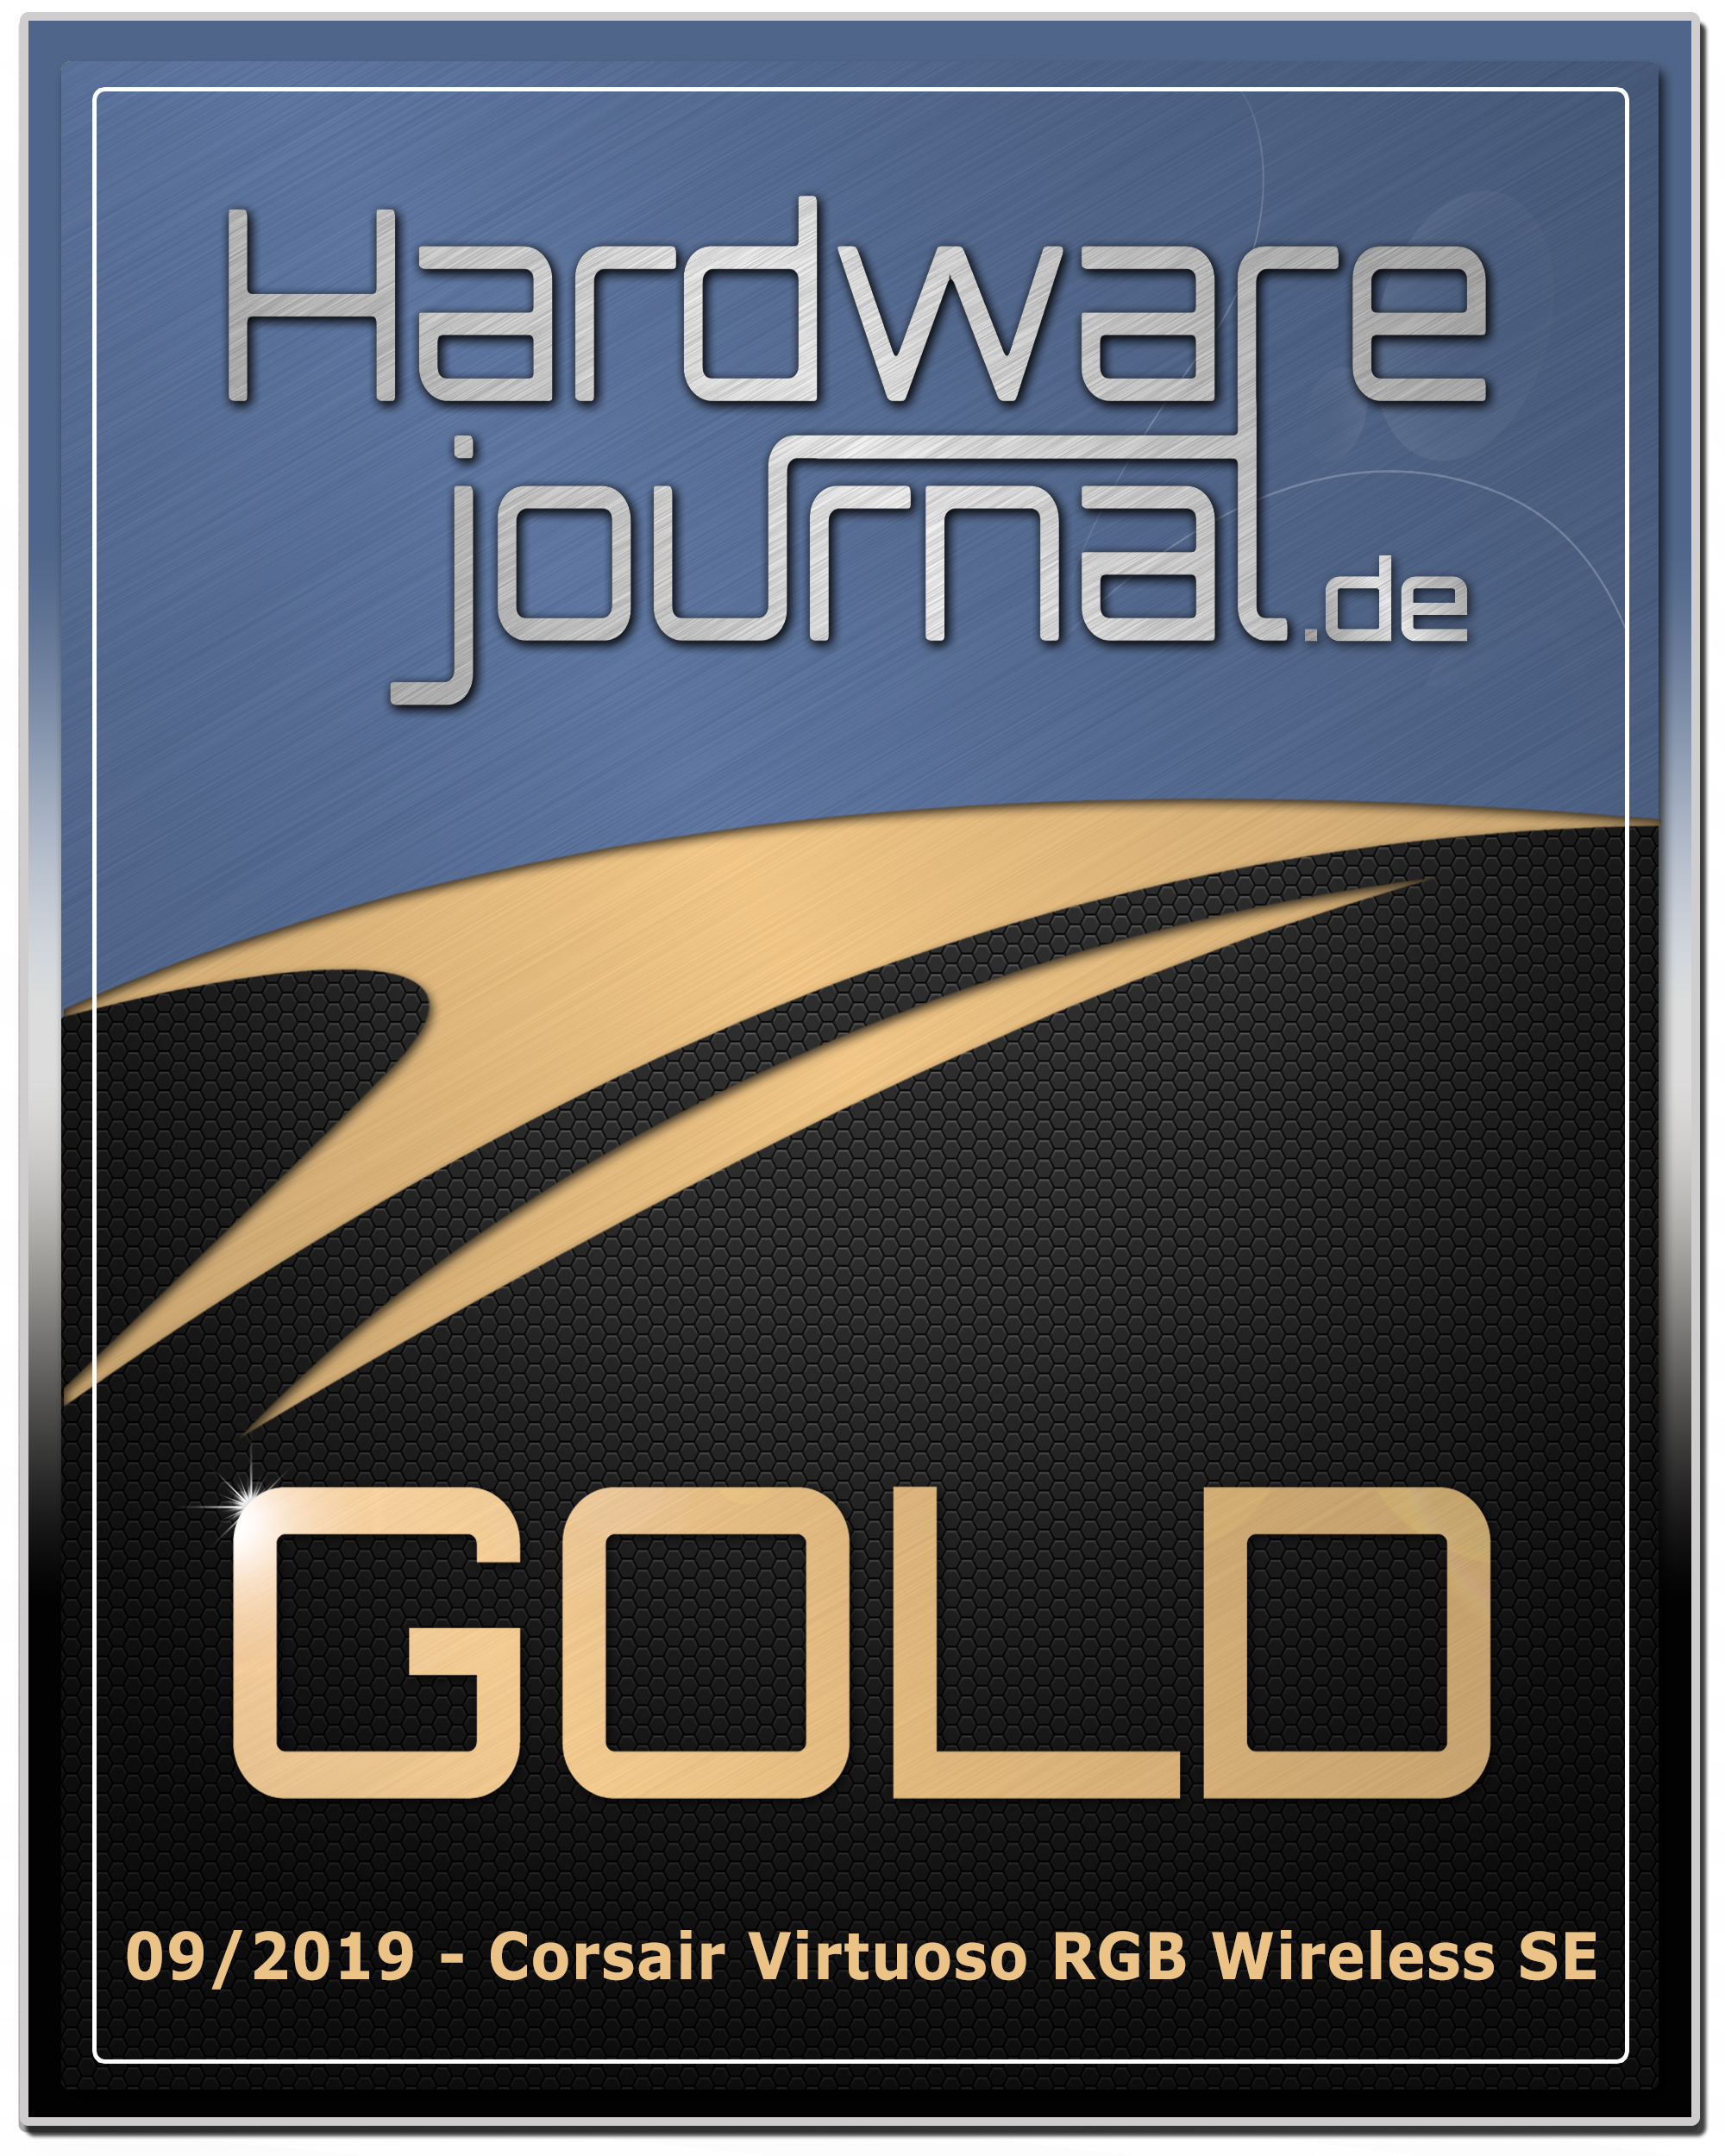 Corsair Virtuoso RGB Wireless SE Gold Award Hardware Journal